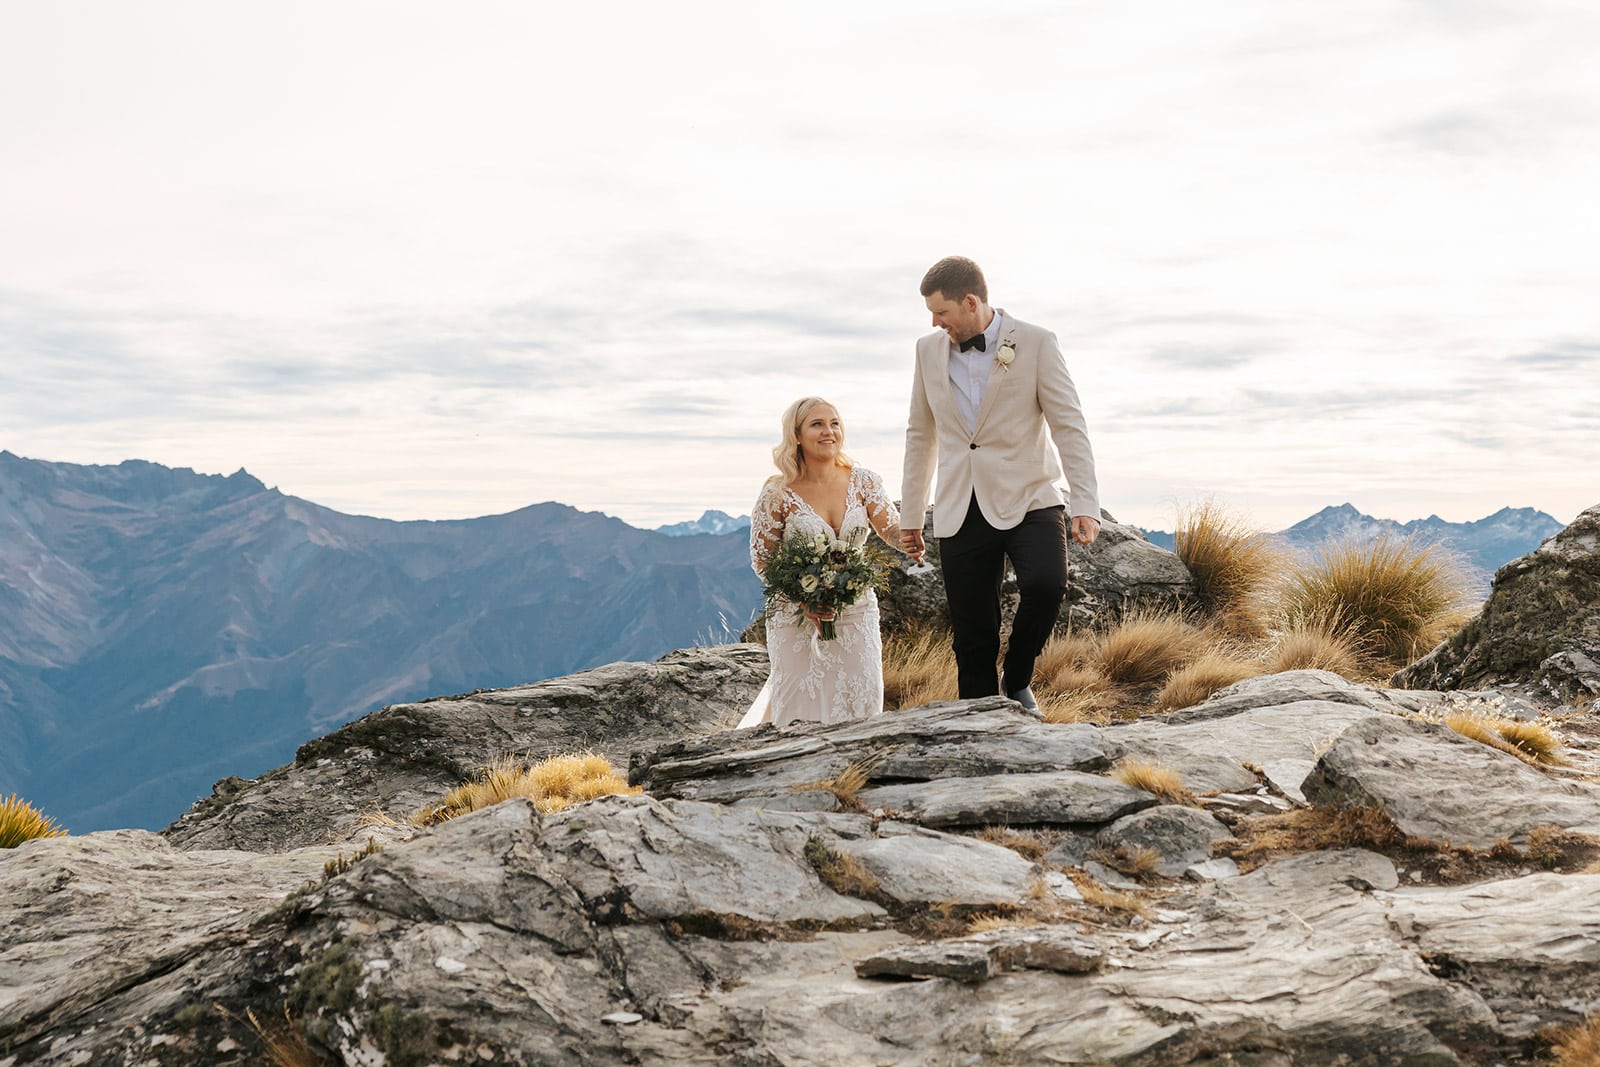 Autumn heli wedding on The Ledge in Queenstown New Zealand